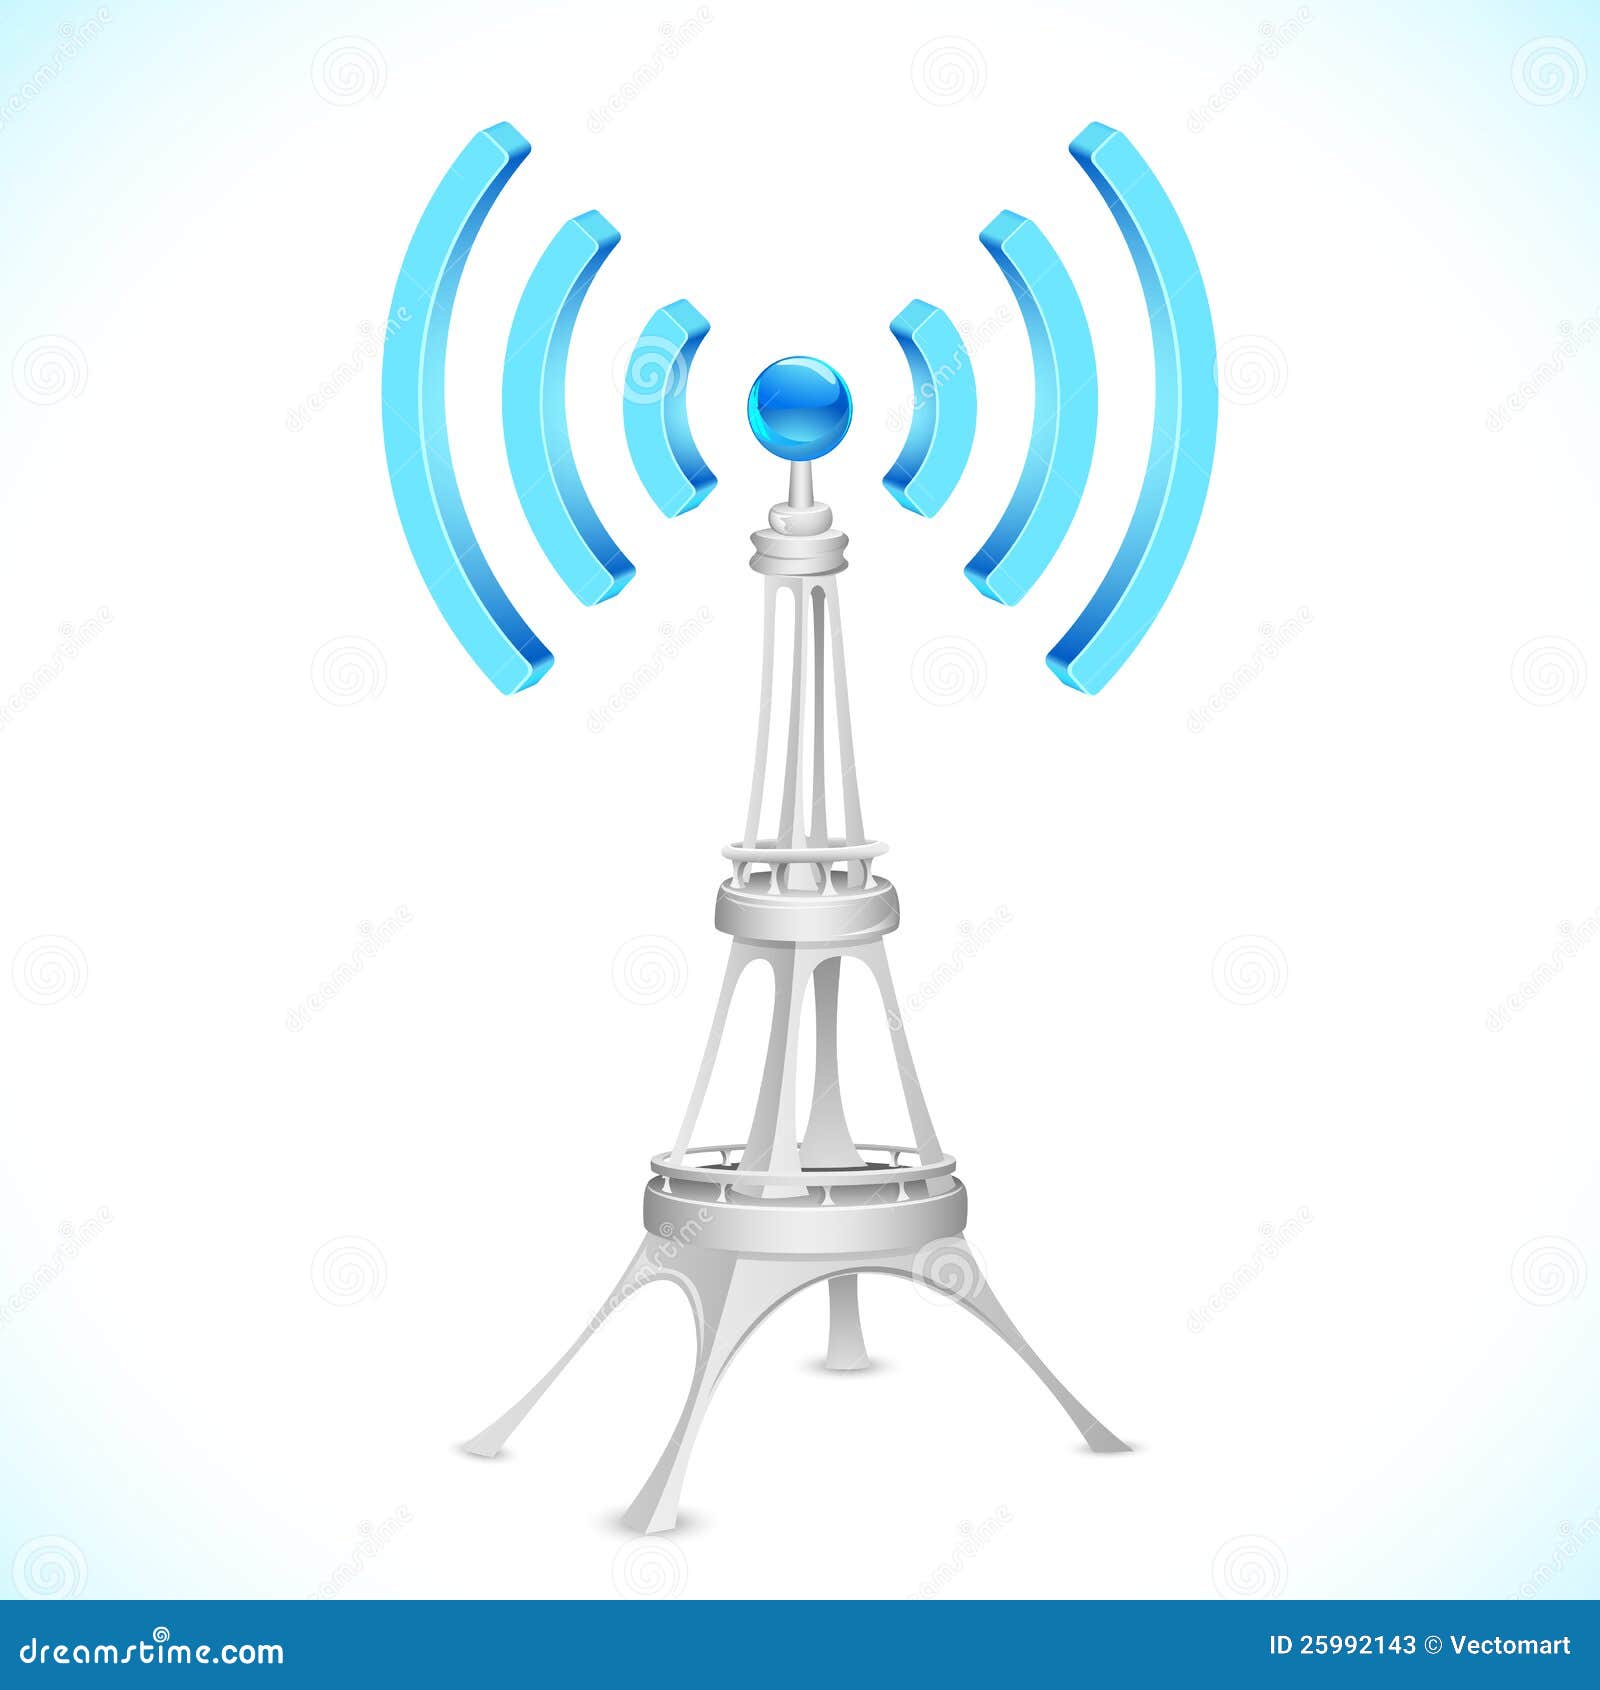 wi-fi tower